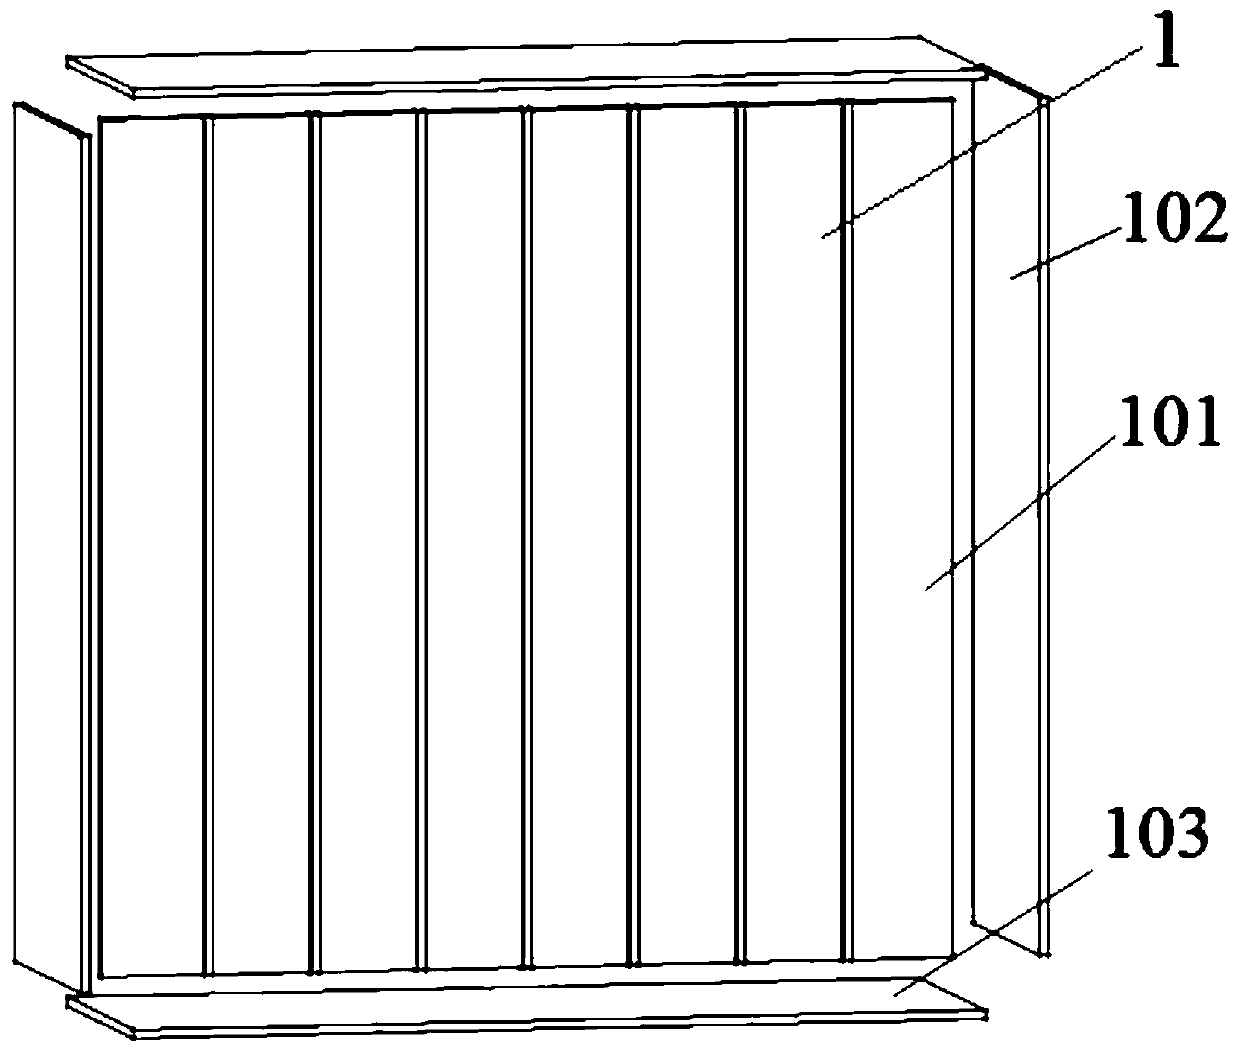 A prefabricated ribbed steel plate-shear wall